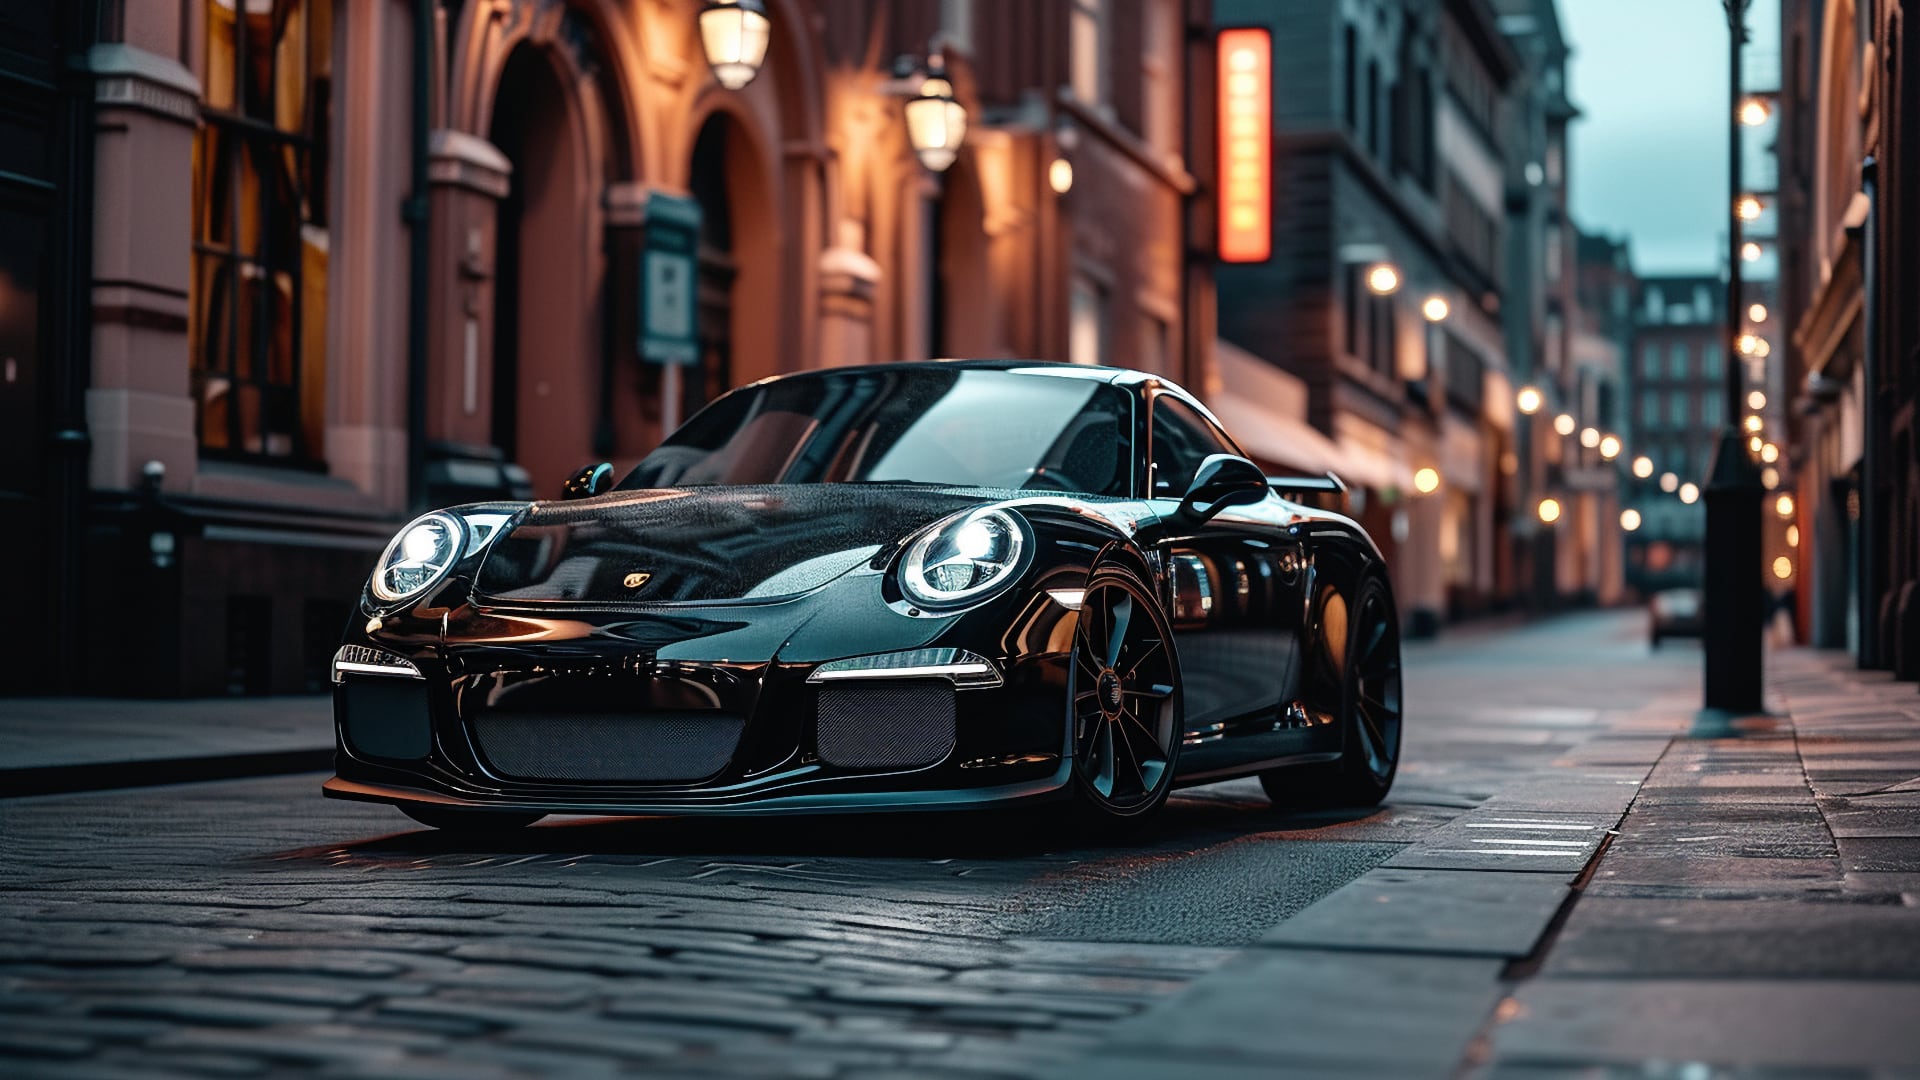 A sleek black Porsche 911 GTS parked on a city street.